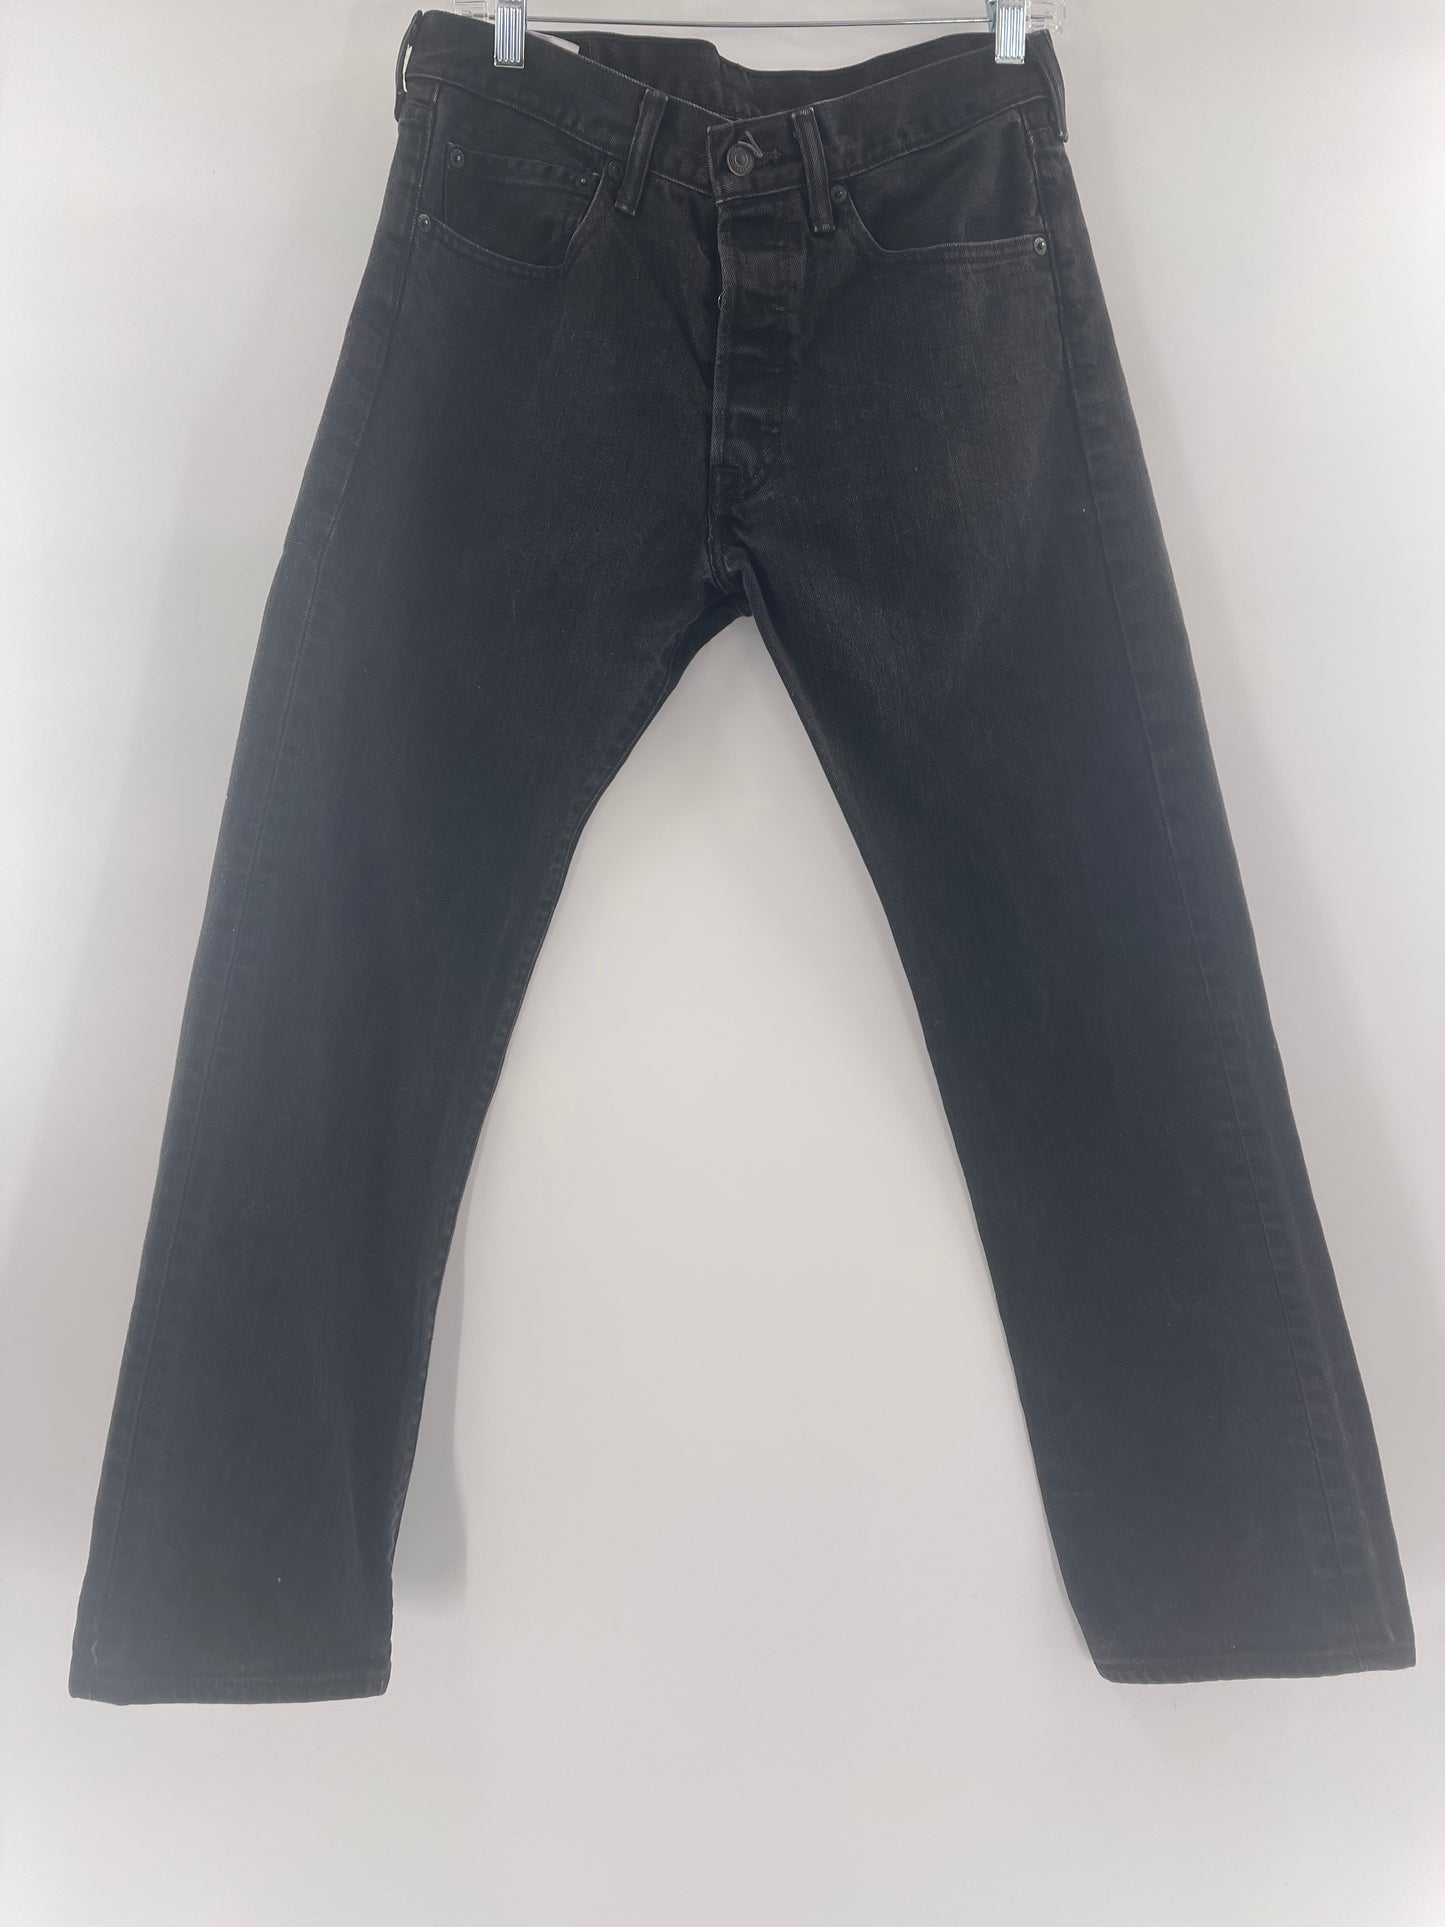 Vintage Levi Strauss Black Jeans (Size 32 x 30)